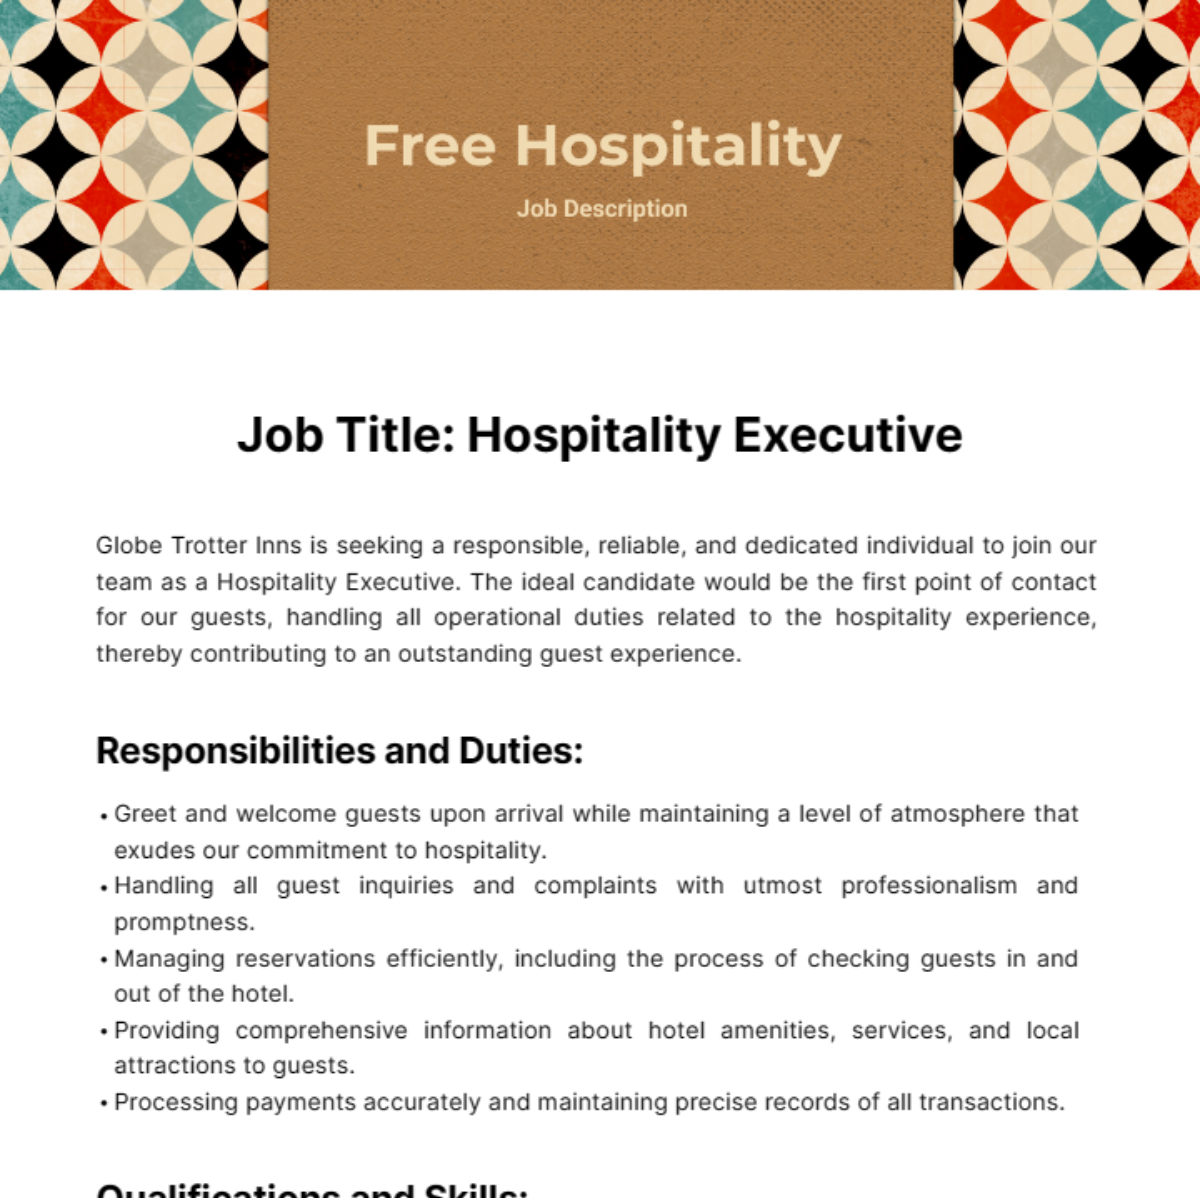 Free Hospitality Job Description Template